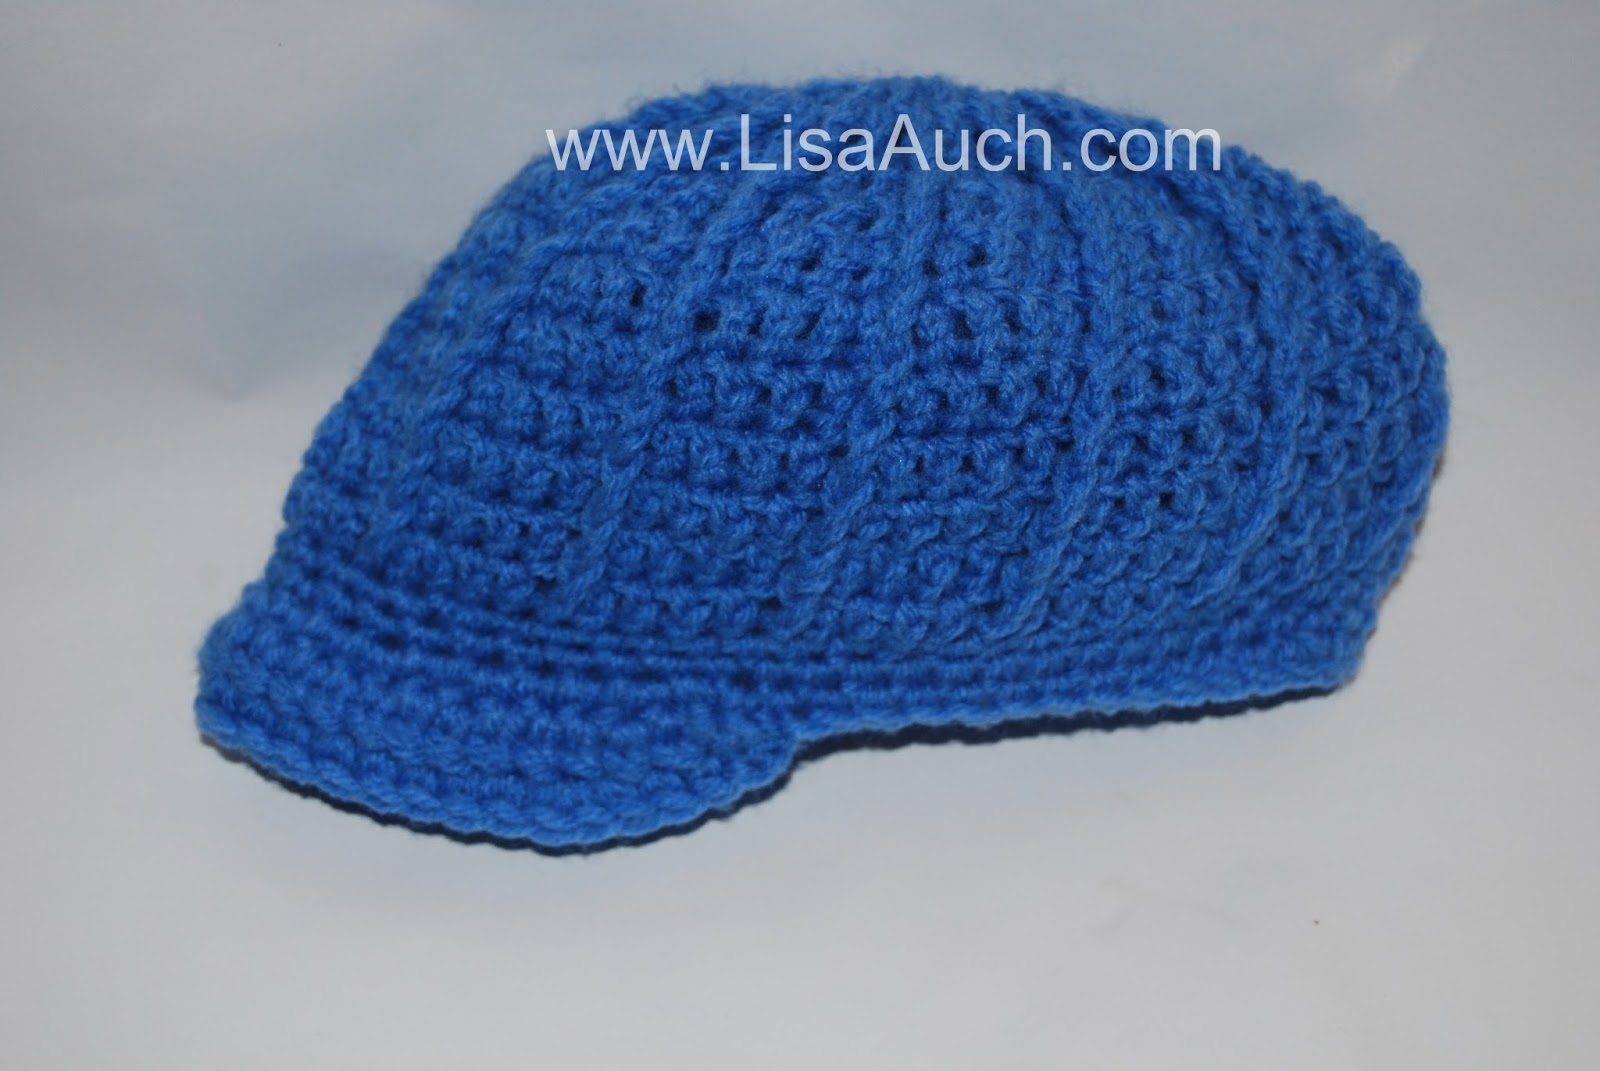 newsboy cap pattern:Hip Hats to Crochet (Leisure Arts #3908